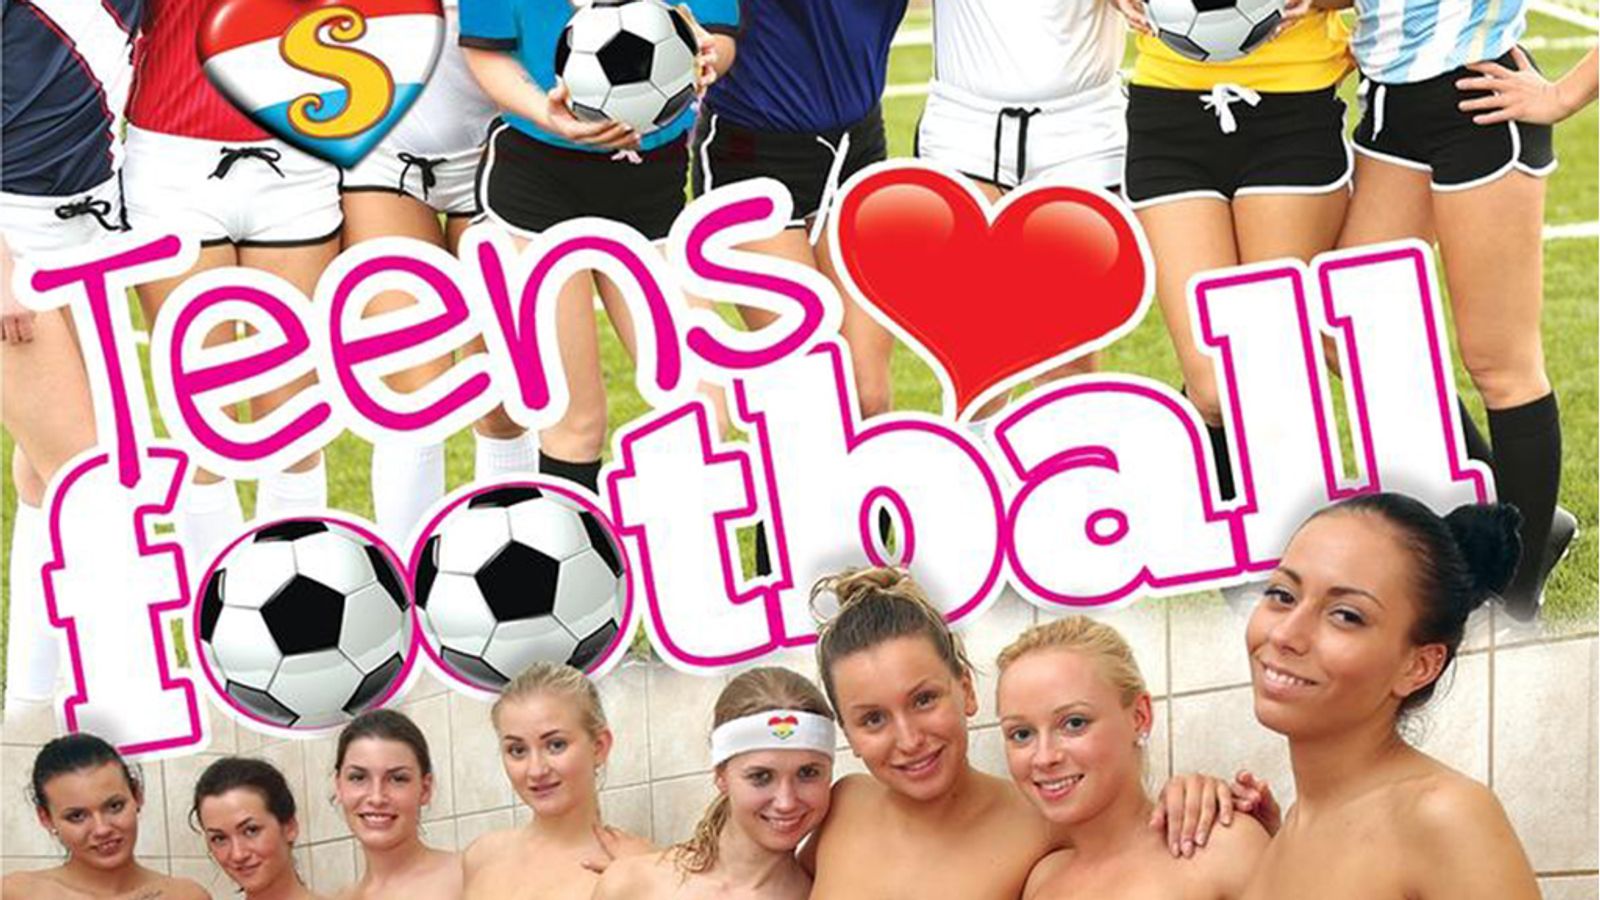 Even In Europe, MySexyKittens ‘Teens Love Football’